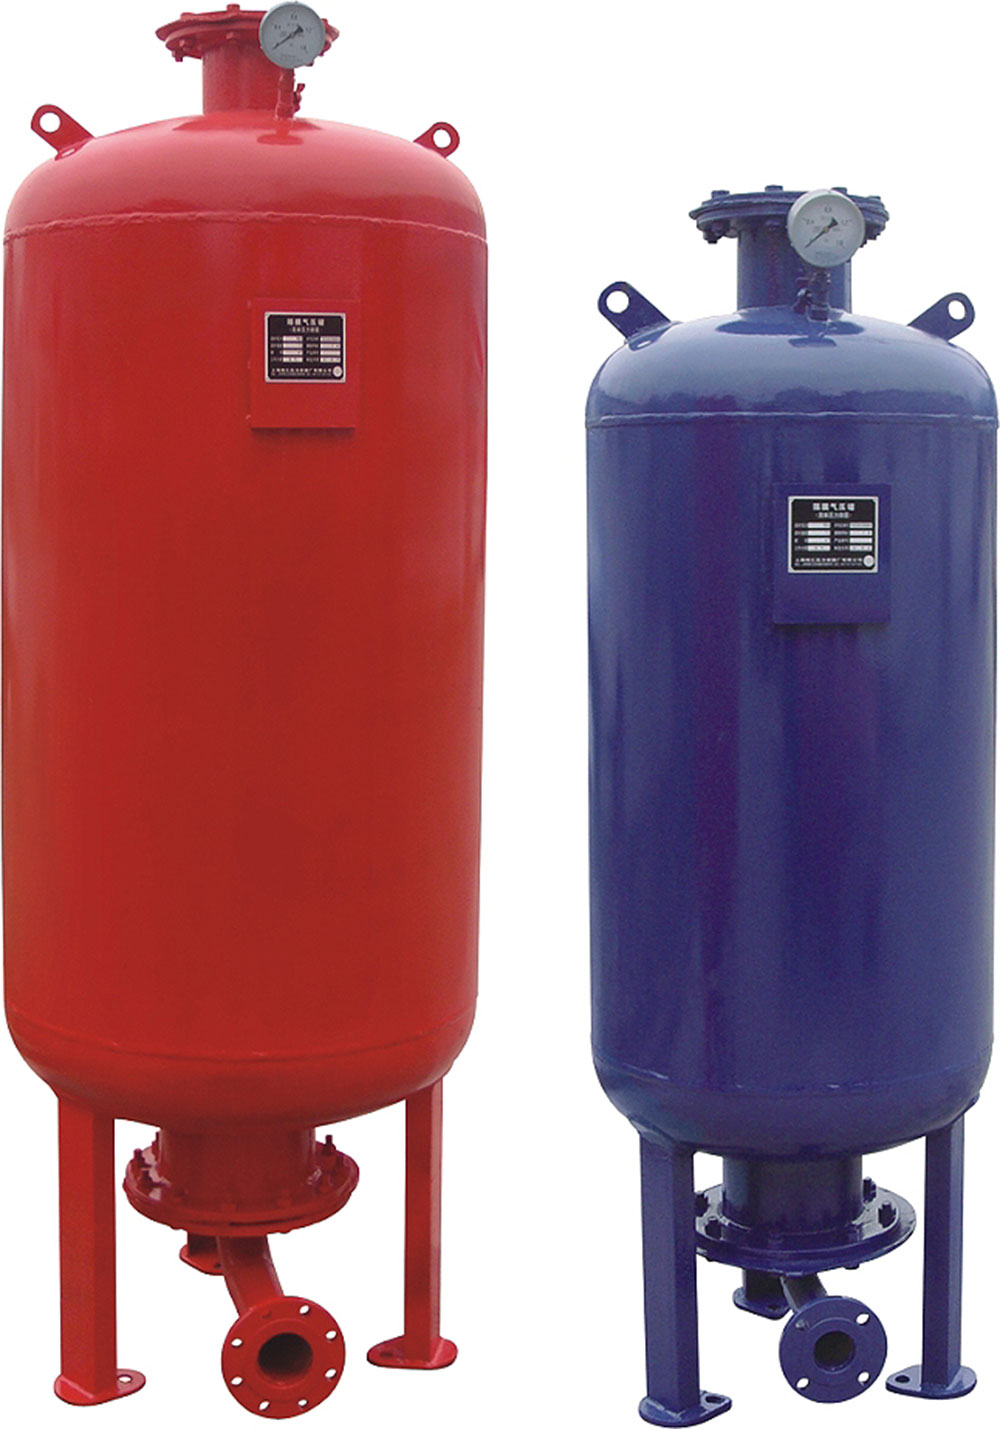 pressure tank 1 1 - The Working Principle of The Diaphragm Pressure Tank